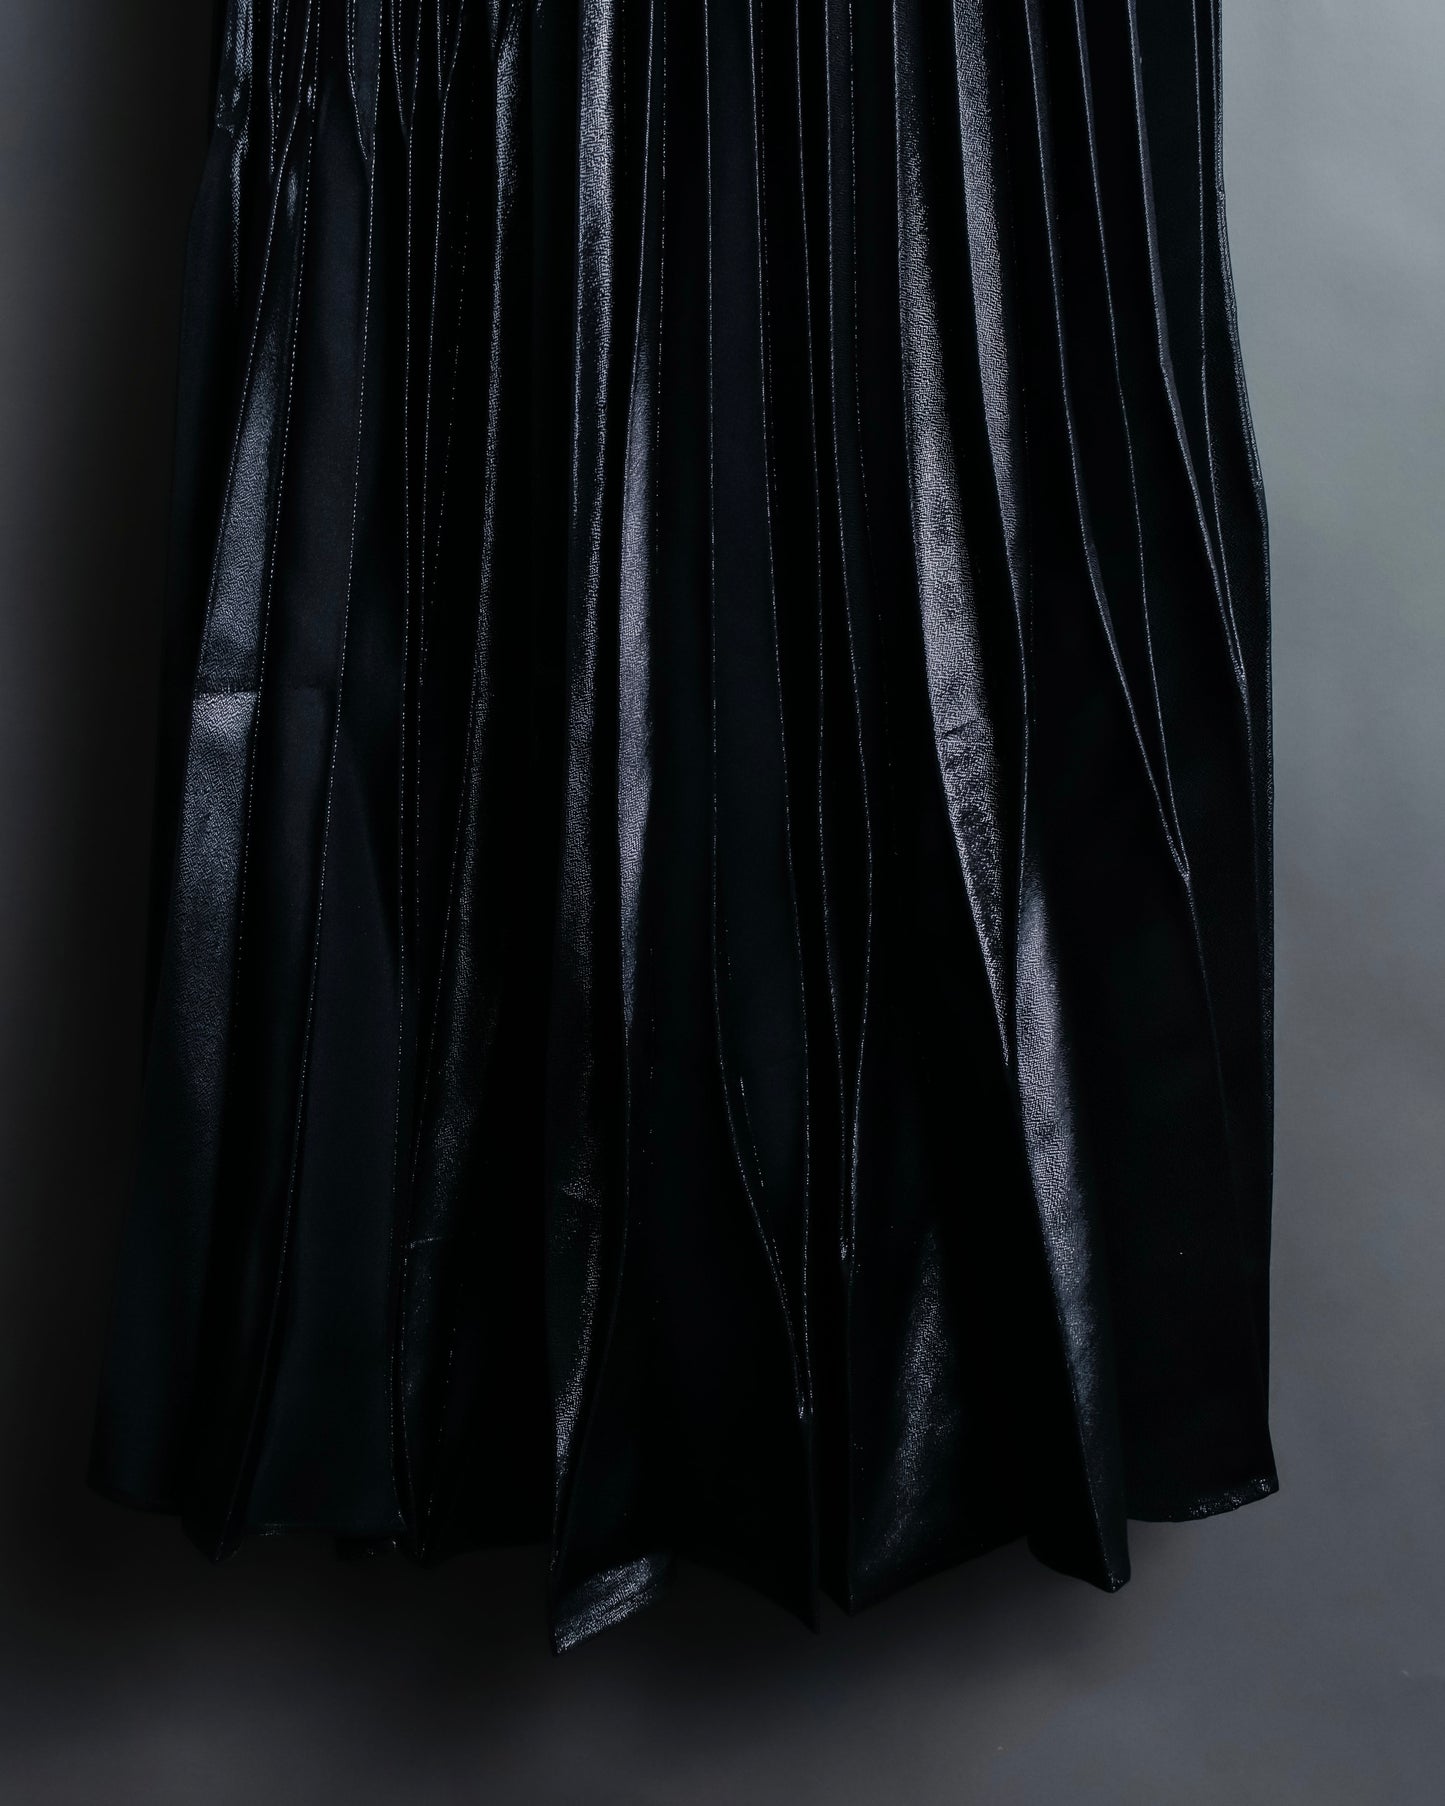 "UN3D." Shiny three-dimensional pleated skirt